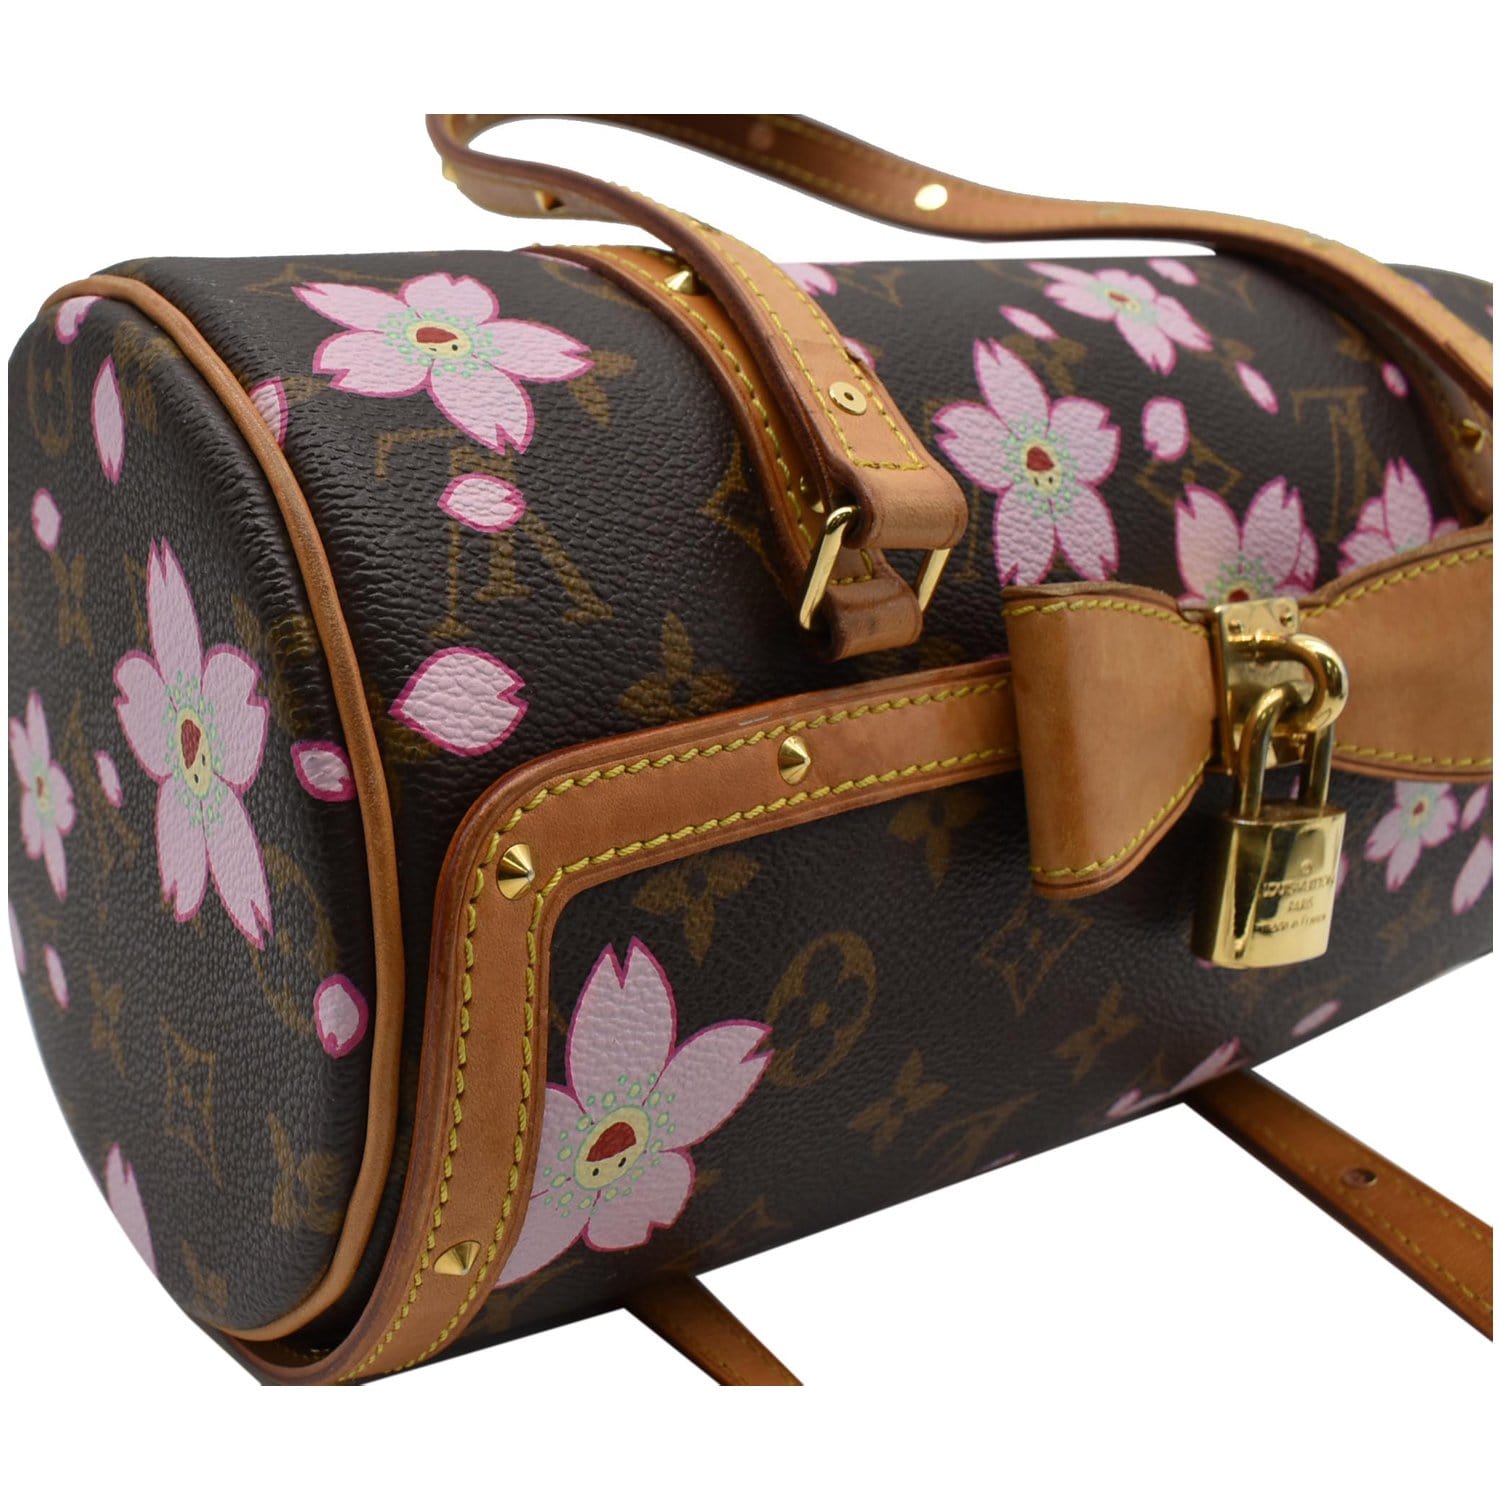 Louis Vuitton Papillon Barrel Bag in Monogram Canvas - Bags from